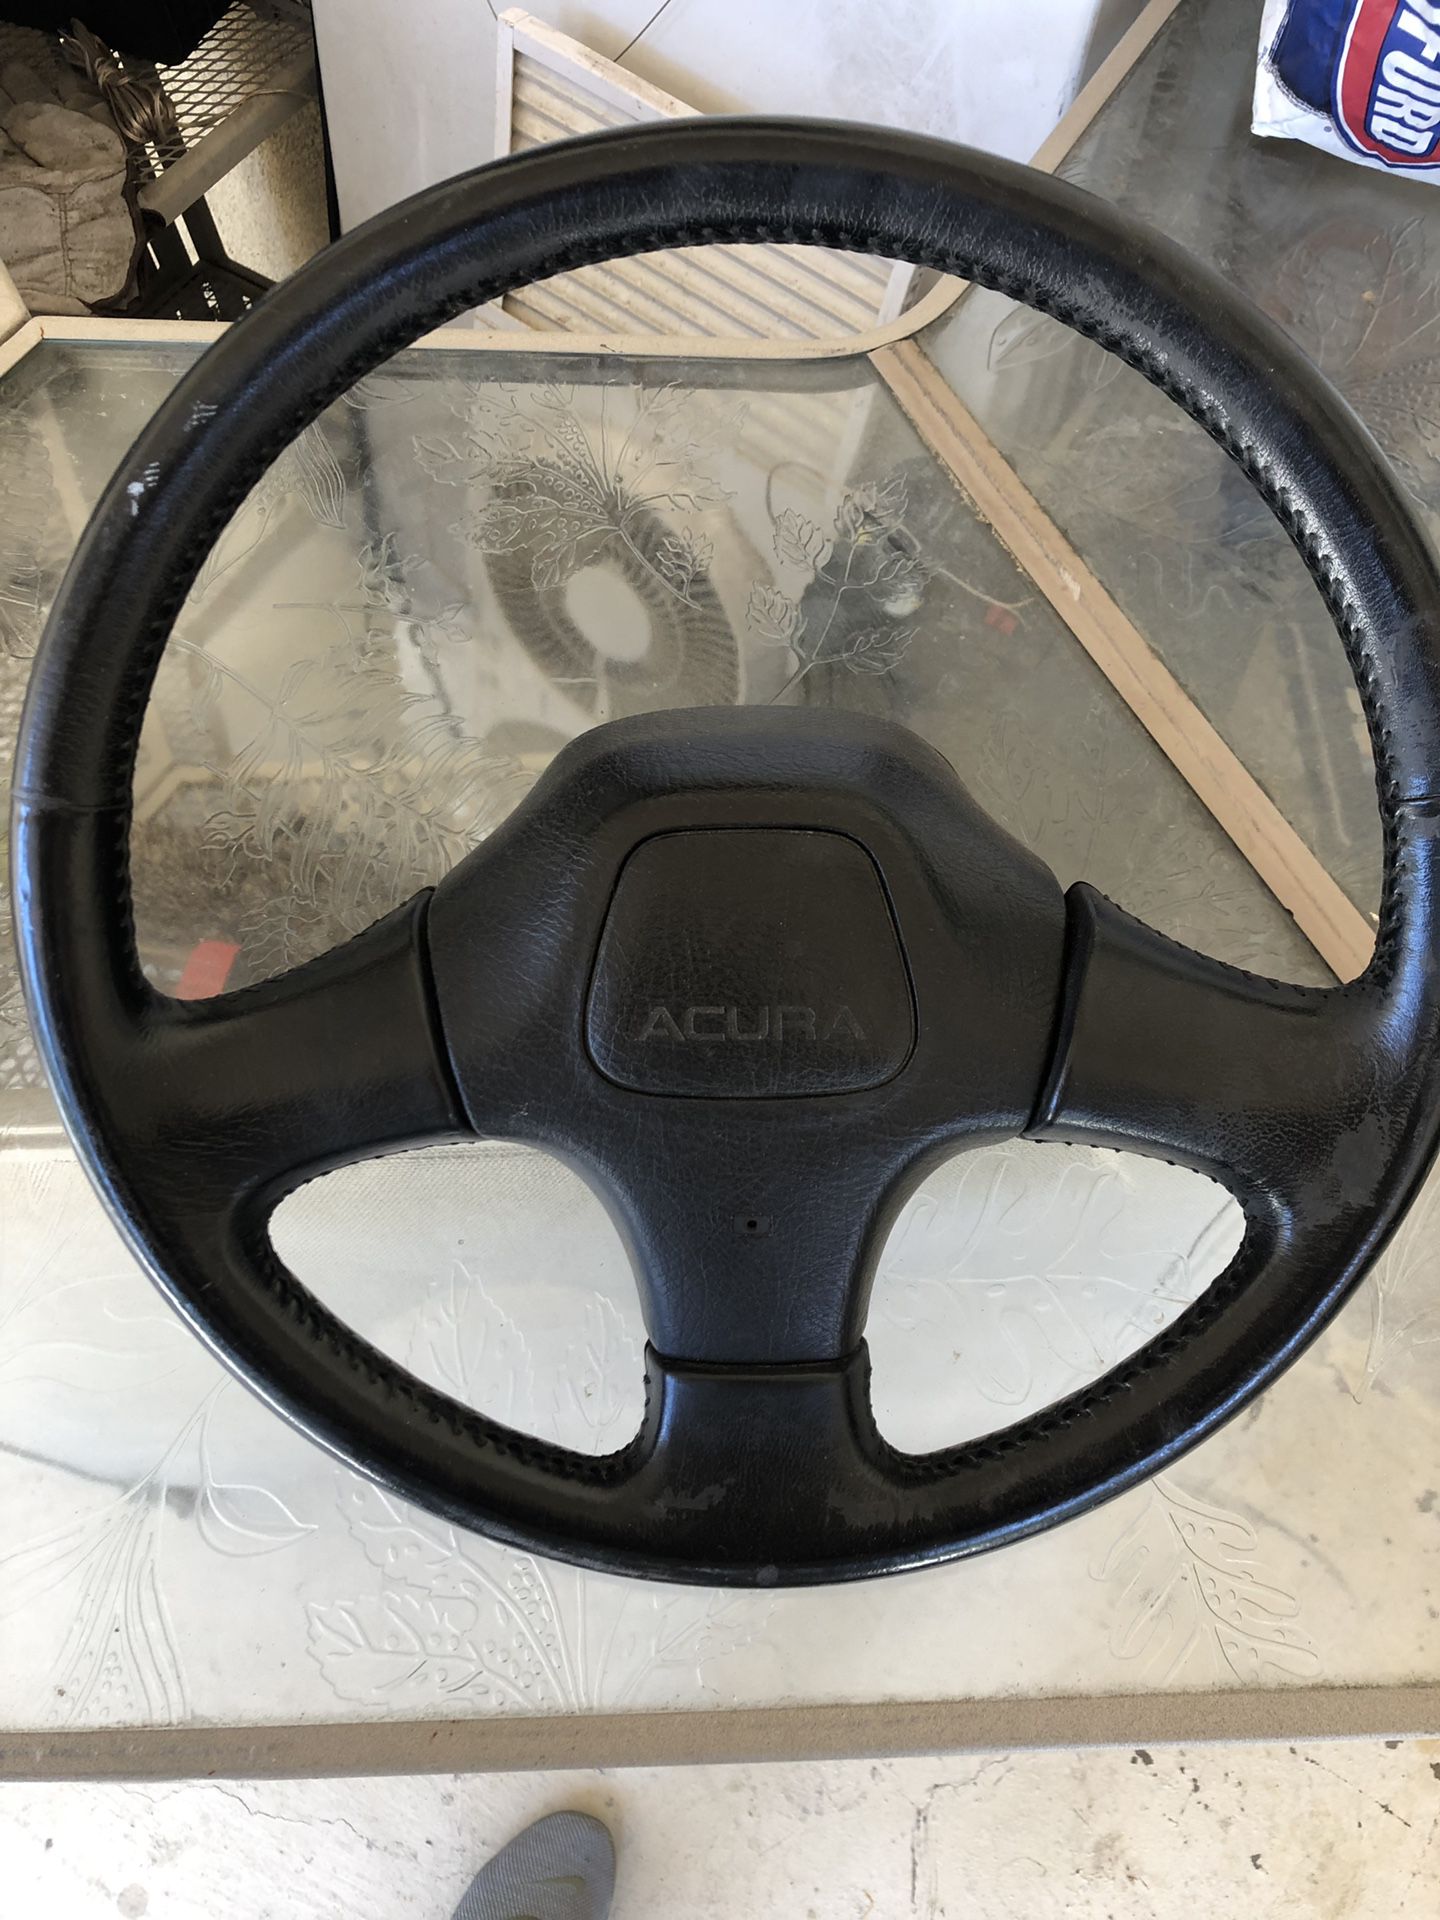 Integra da9 special edition steering wheel